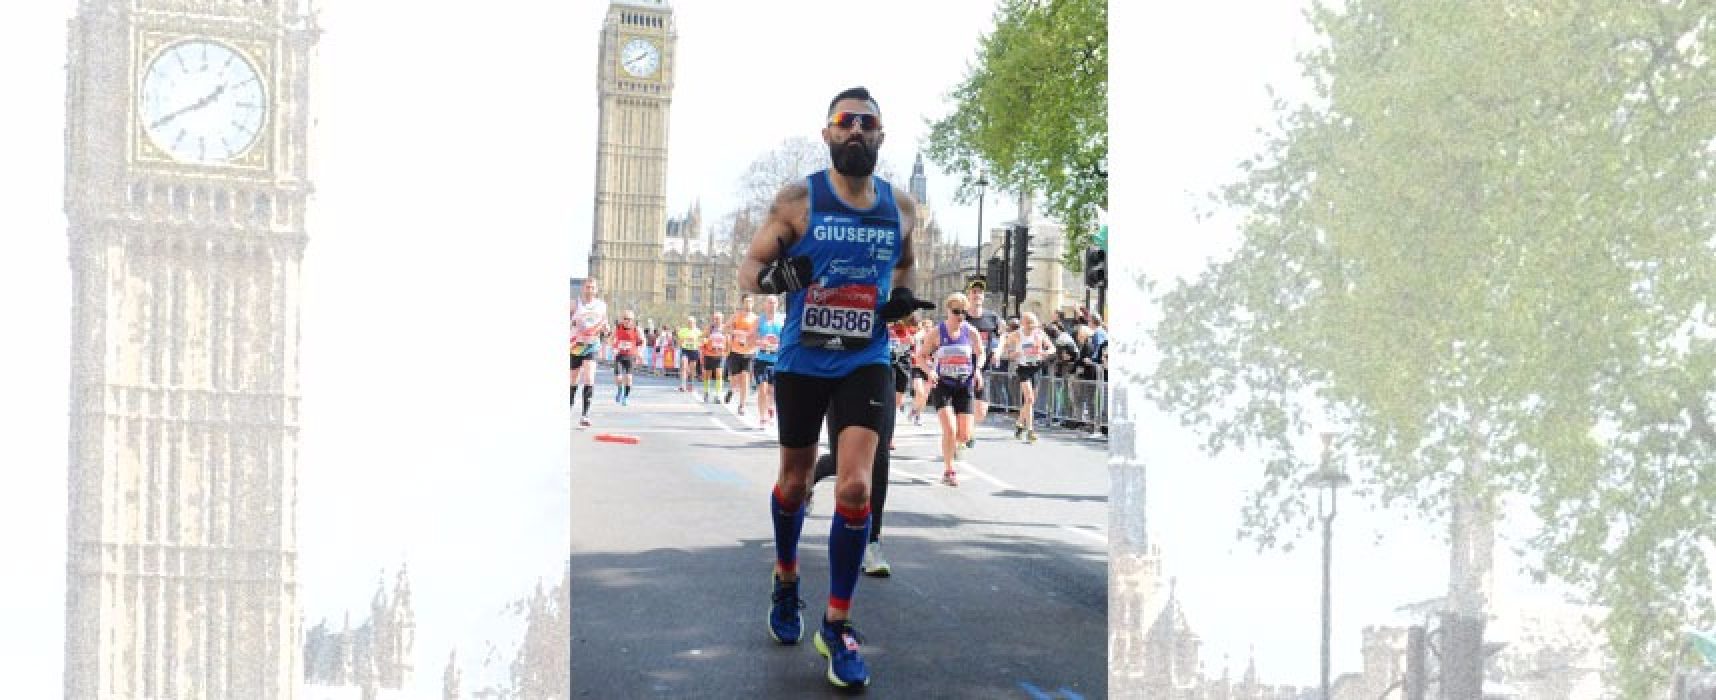 Bisceglie Running, Giuseppe Ruggieri alla maratona di Londra: “Emozioni indescrivibili”